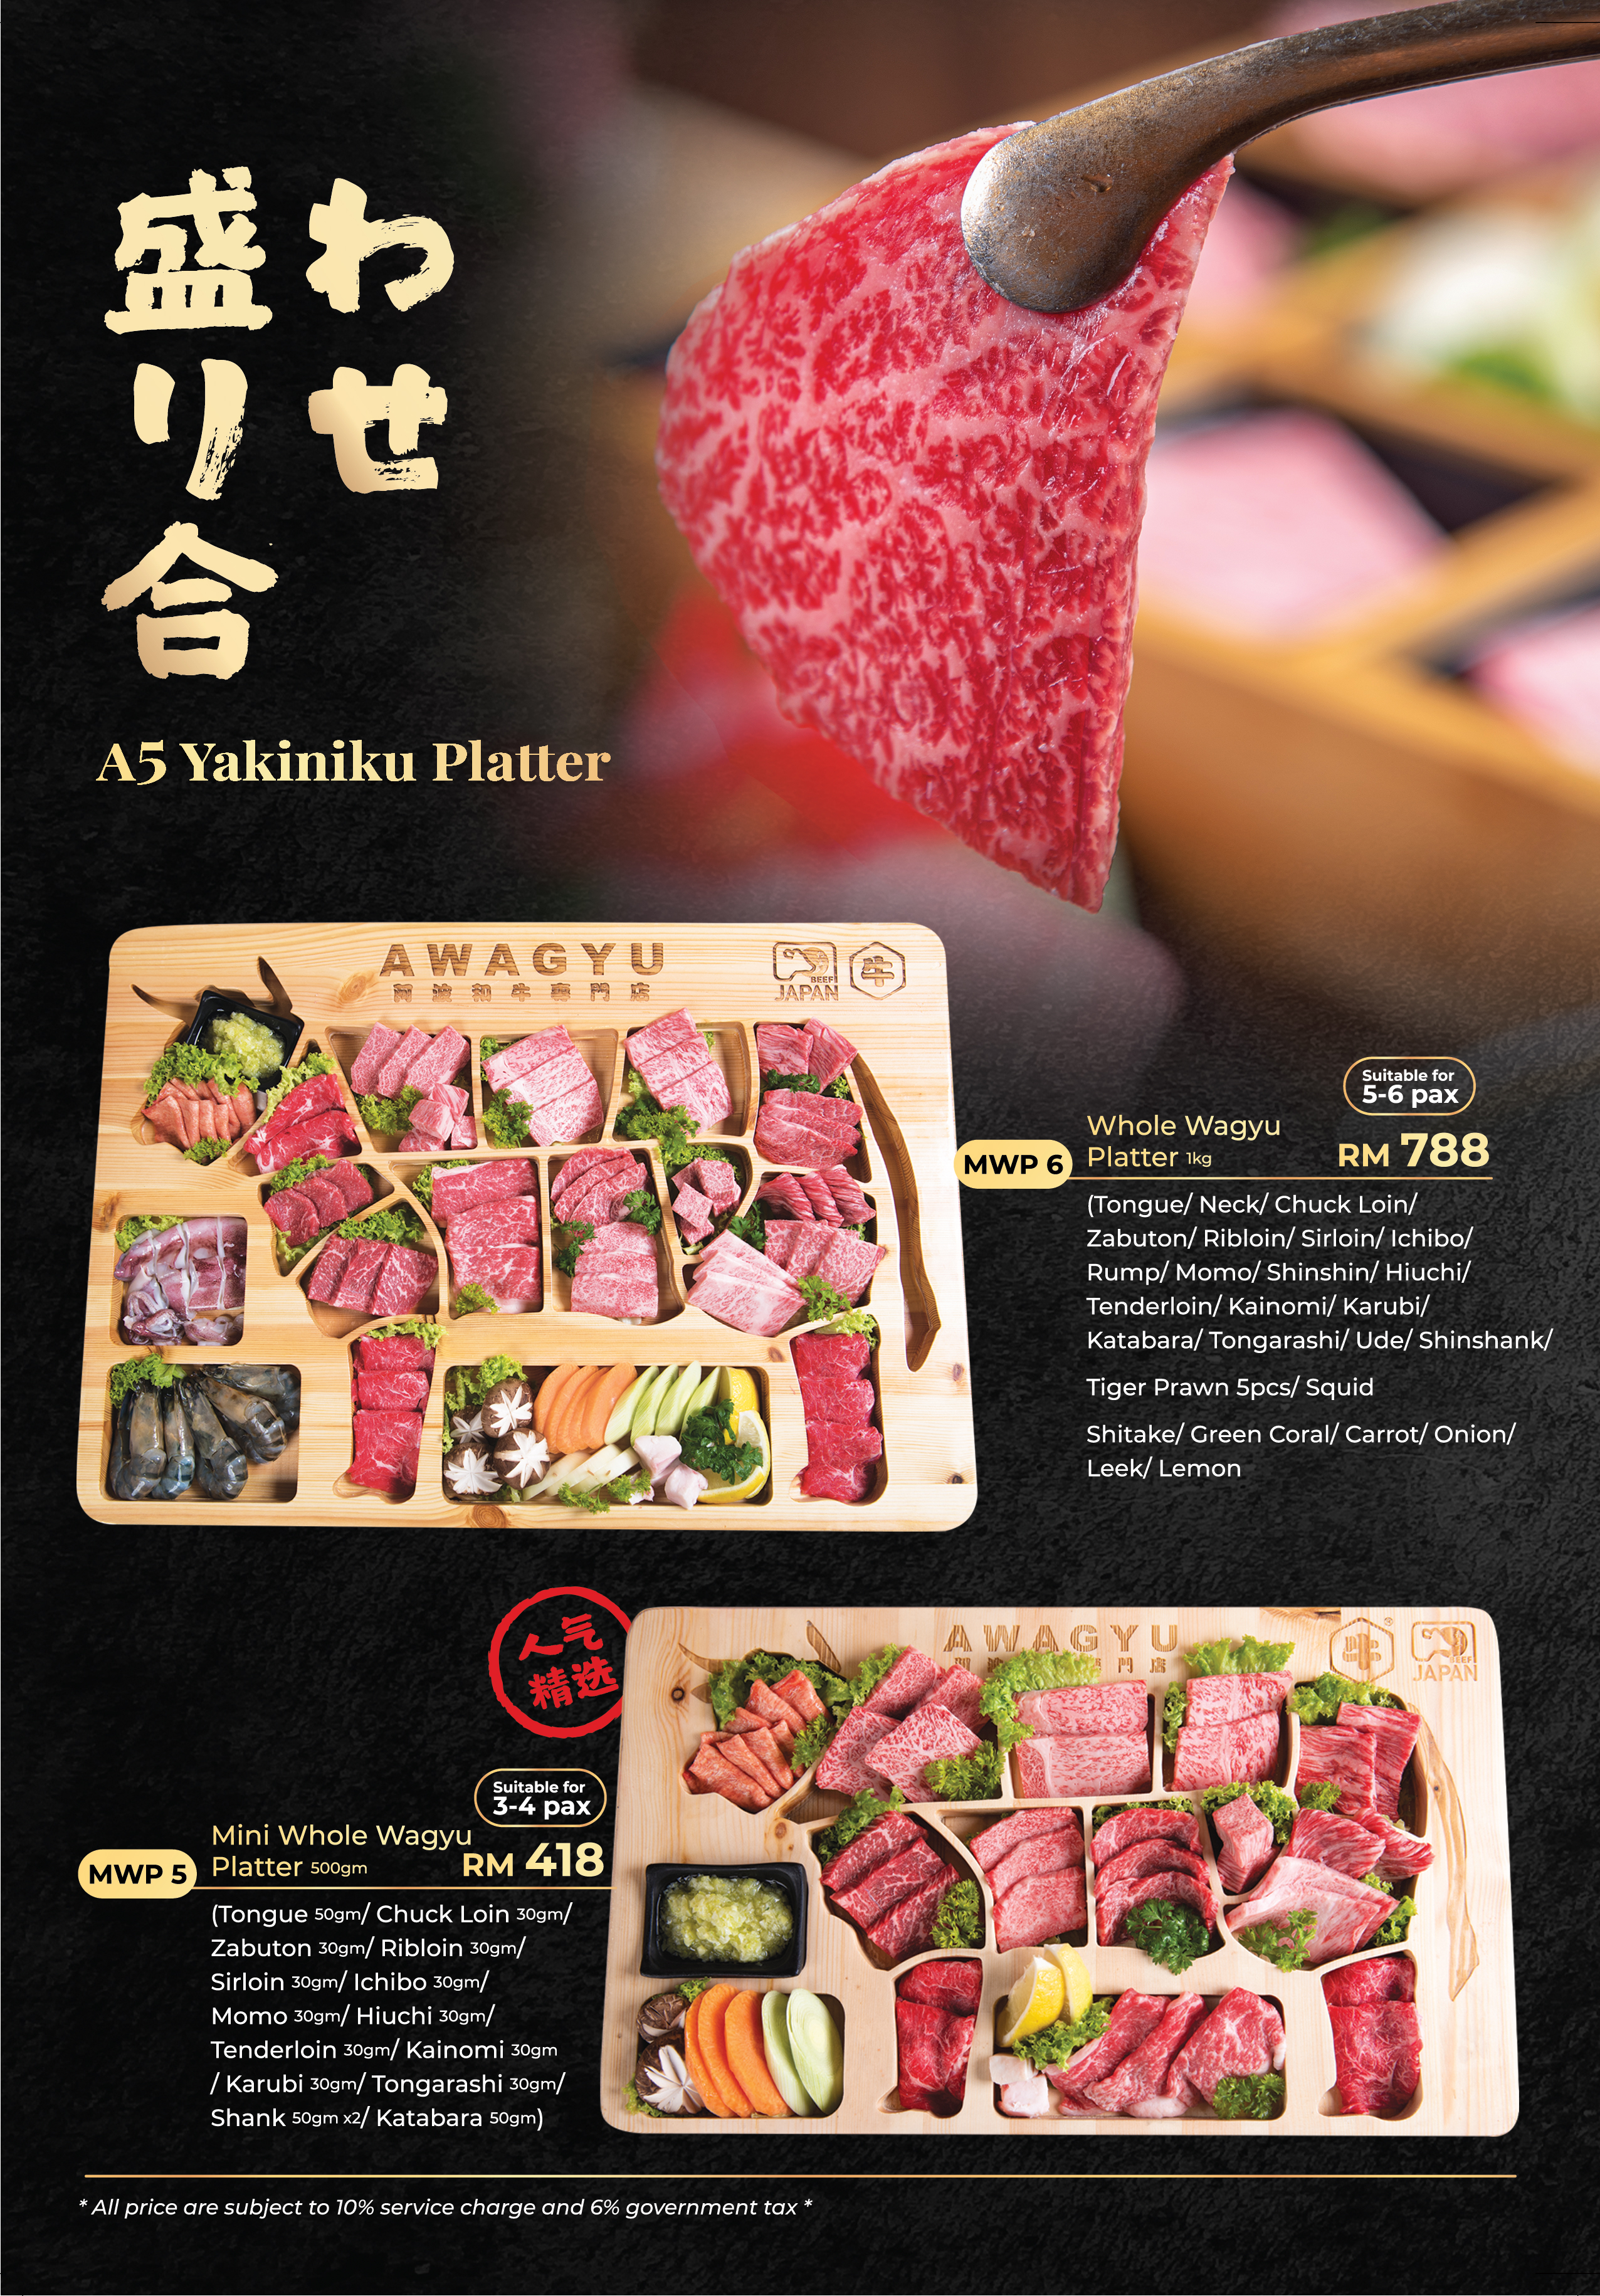 Find the best Japanese restaurant in JB – AWAGYU RESTAURANT OFFICIAL